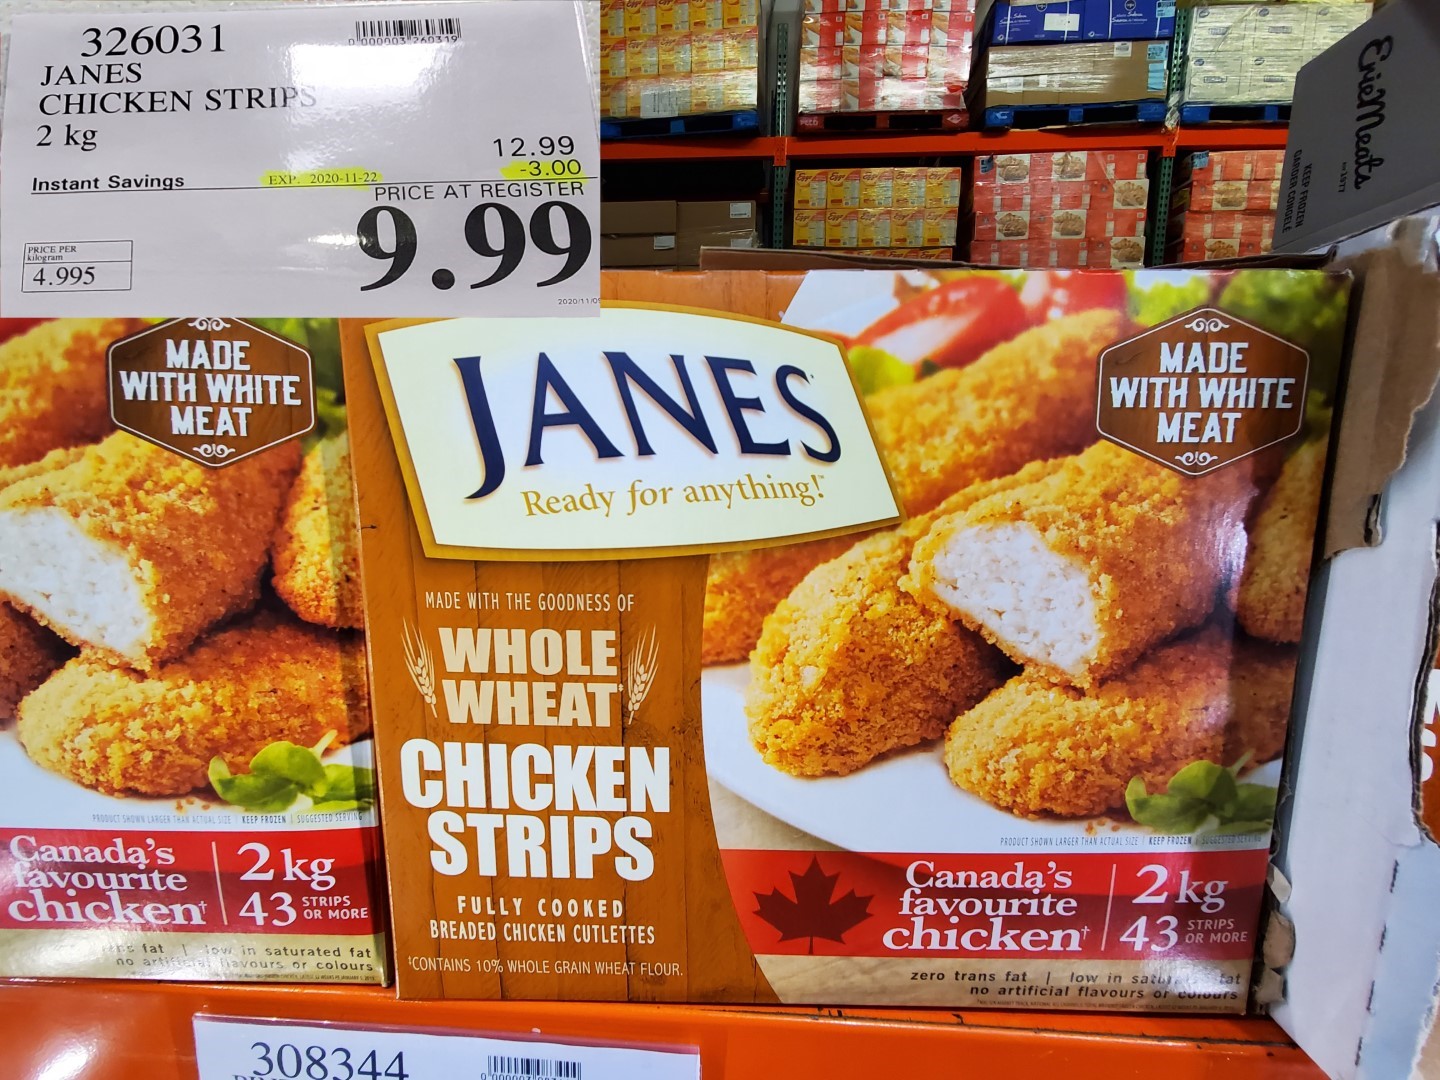 Jane's whole wheat chicken strips